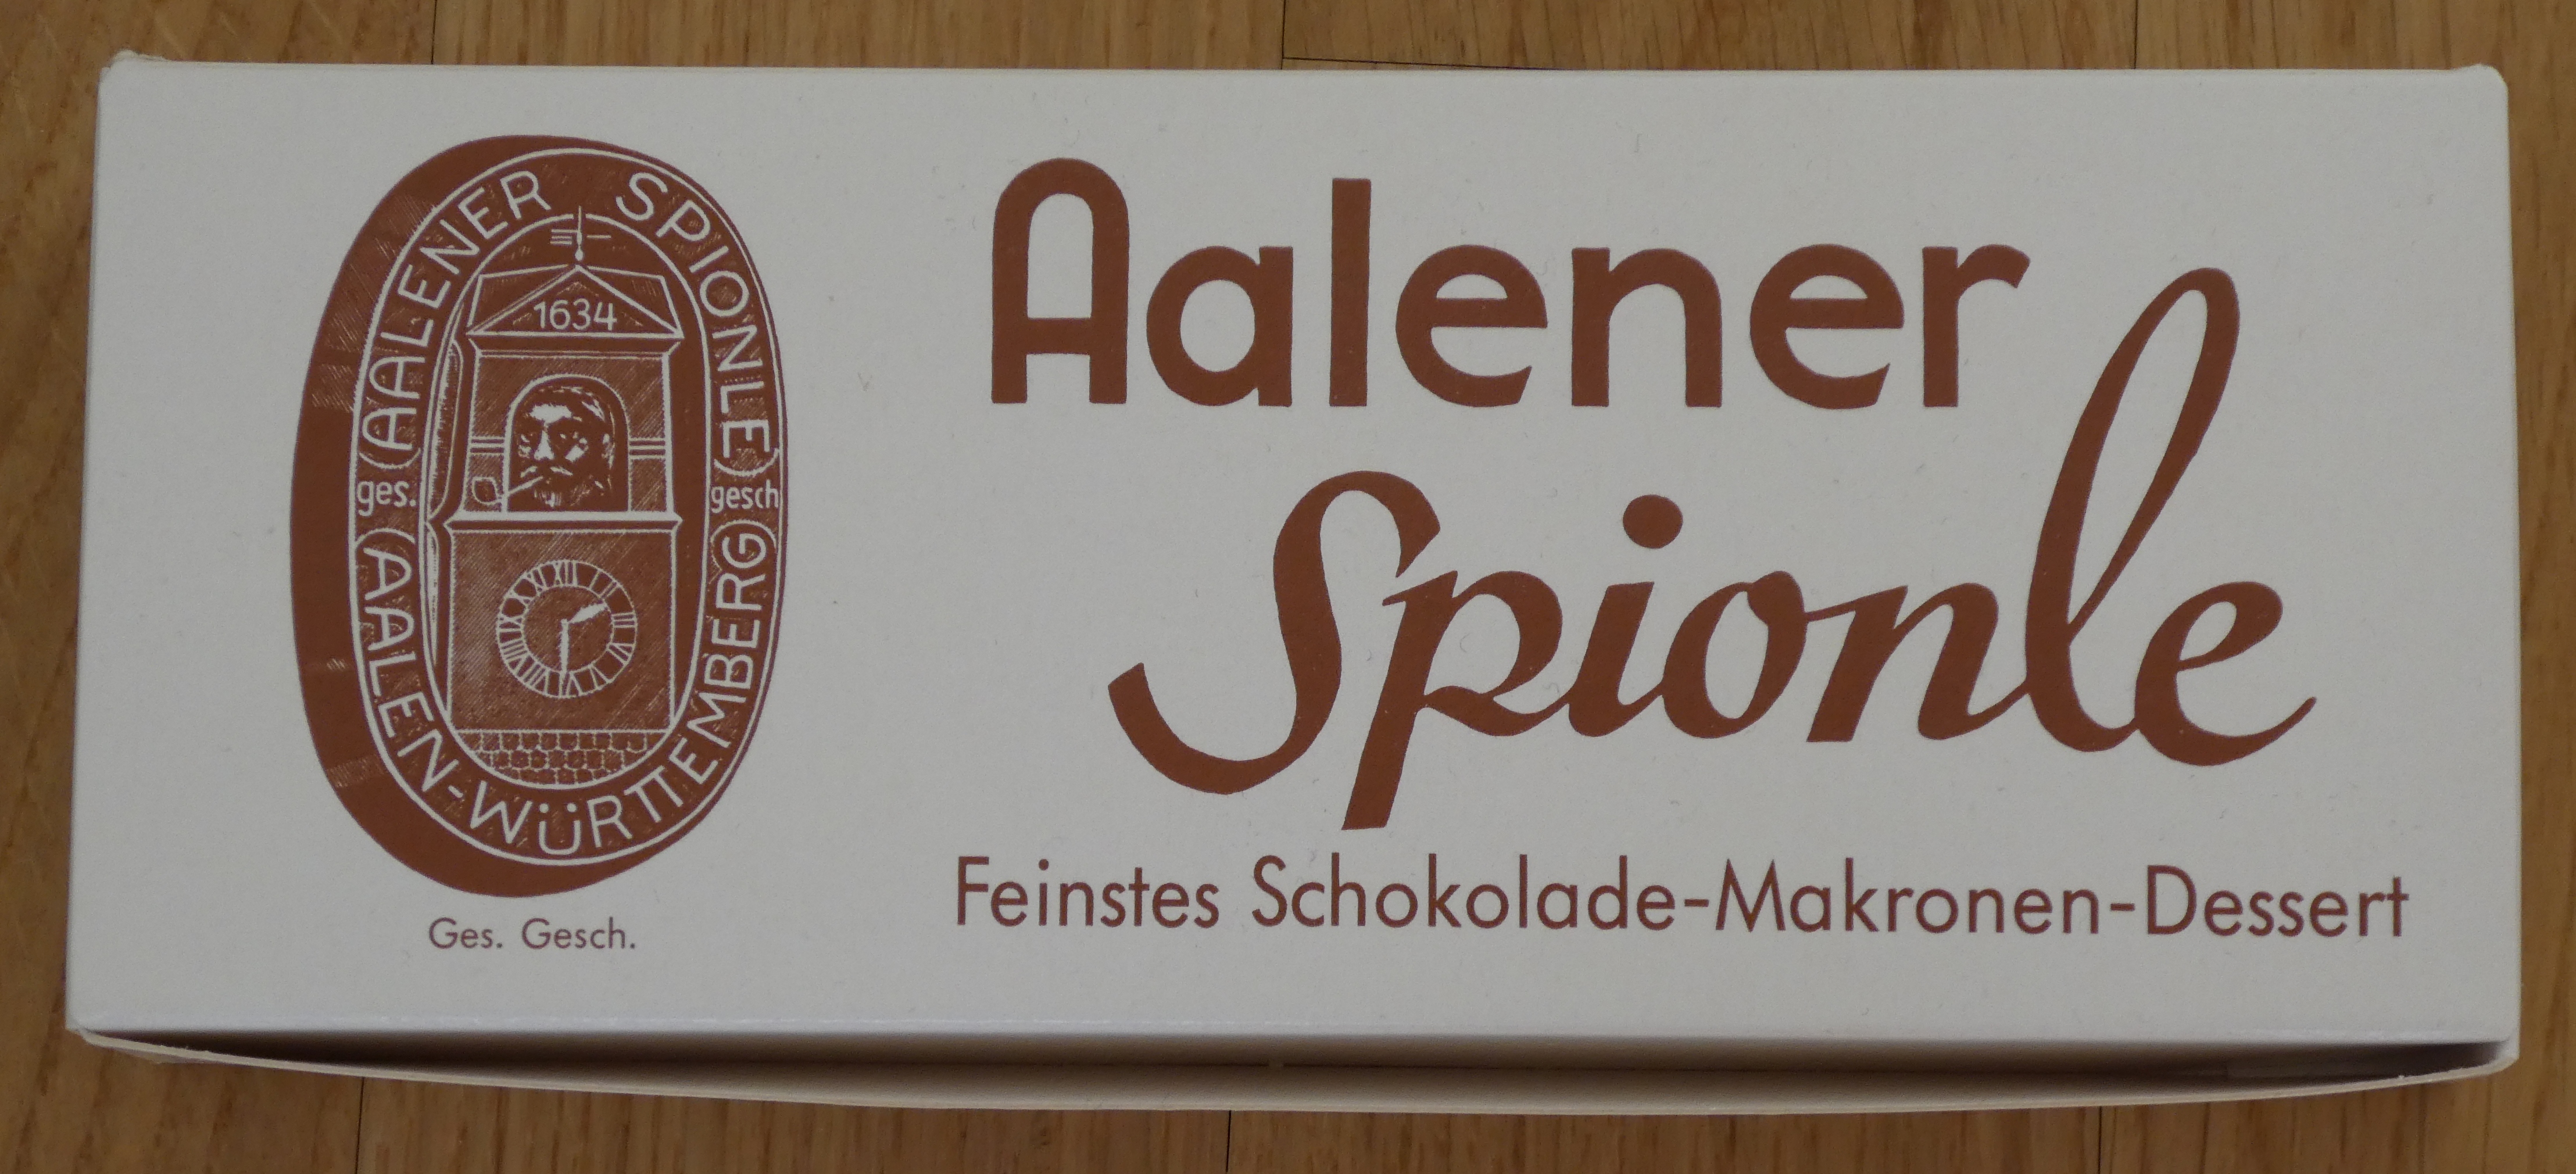 Aalener Spionle - Dessert - Verpackung